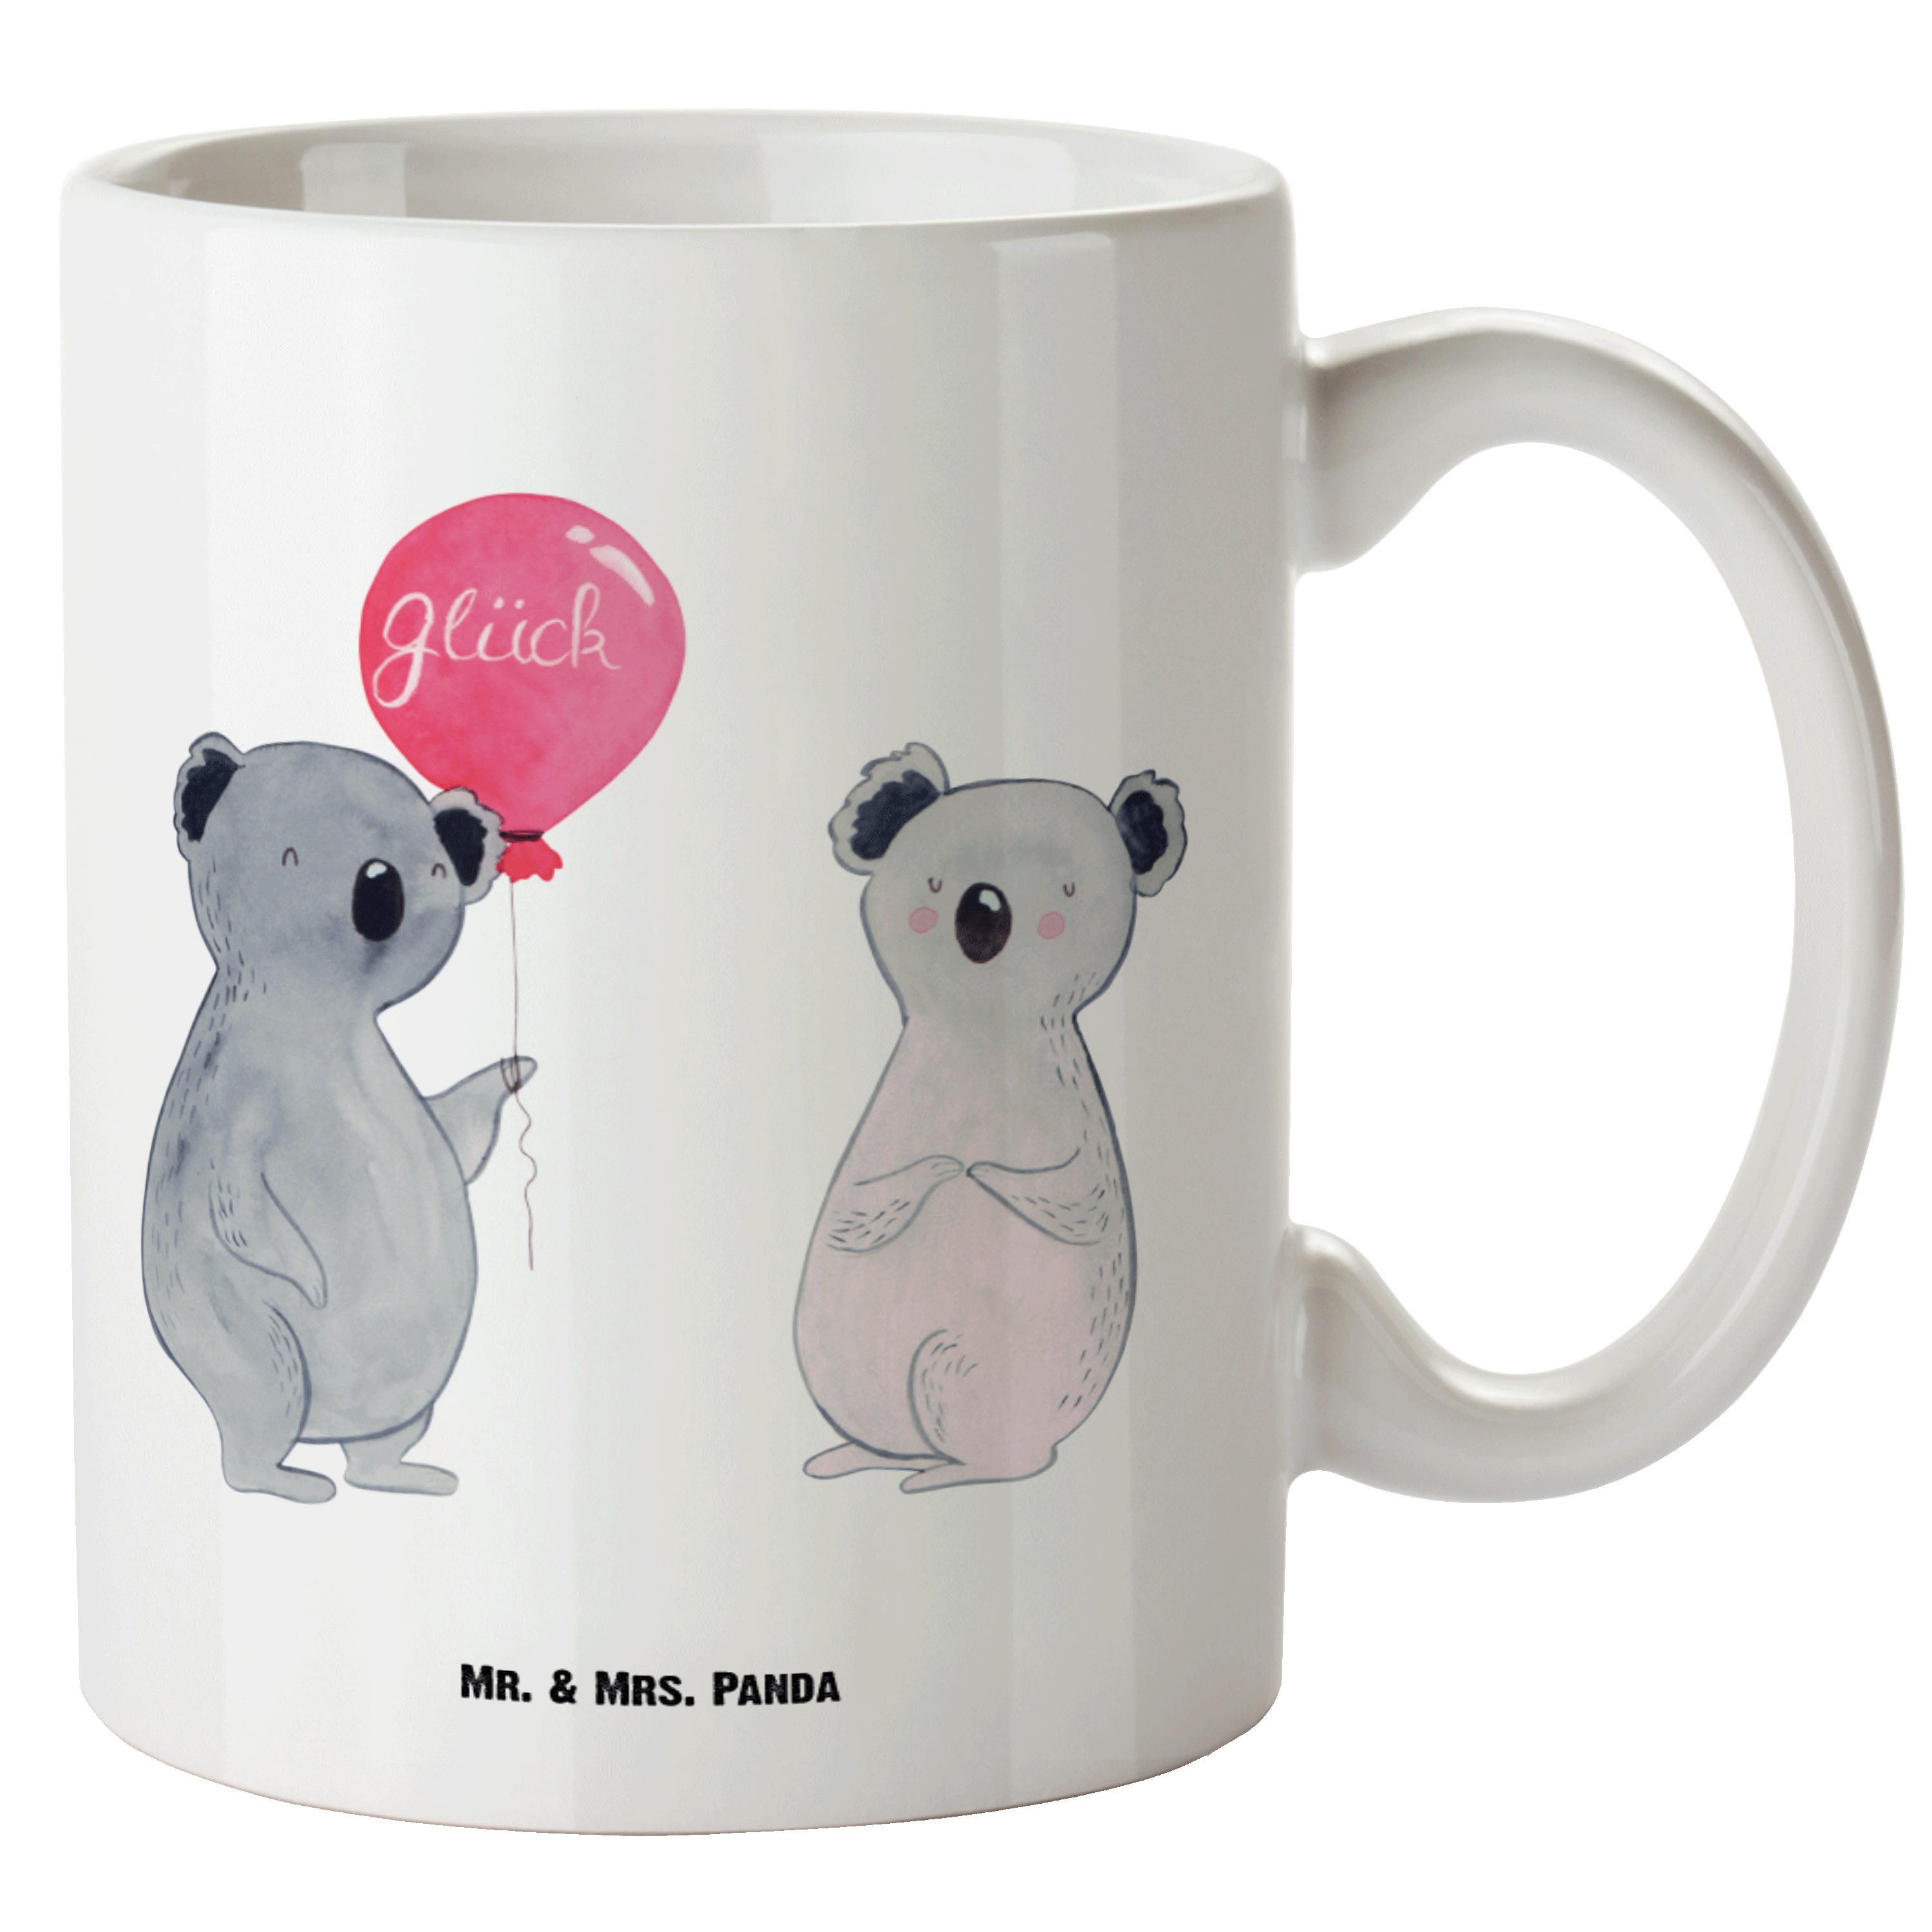 Mr. & Mrs. Panda Tasse Koala Luftballon - Weiß - Geschenk, spülmaschinenfest, Groß, XL Tasse, XL Tasse Keramik